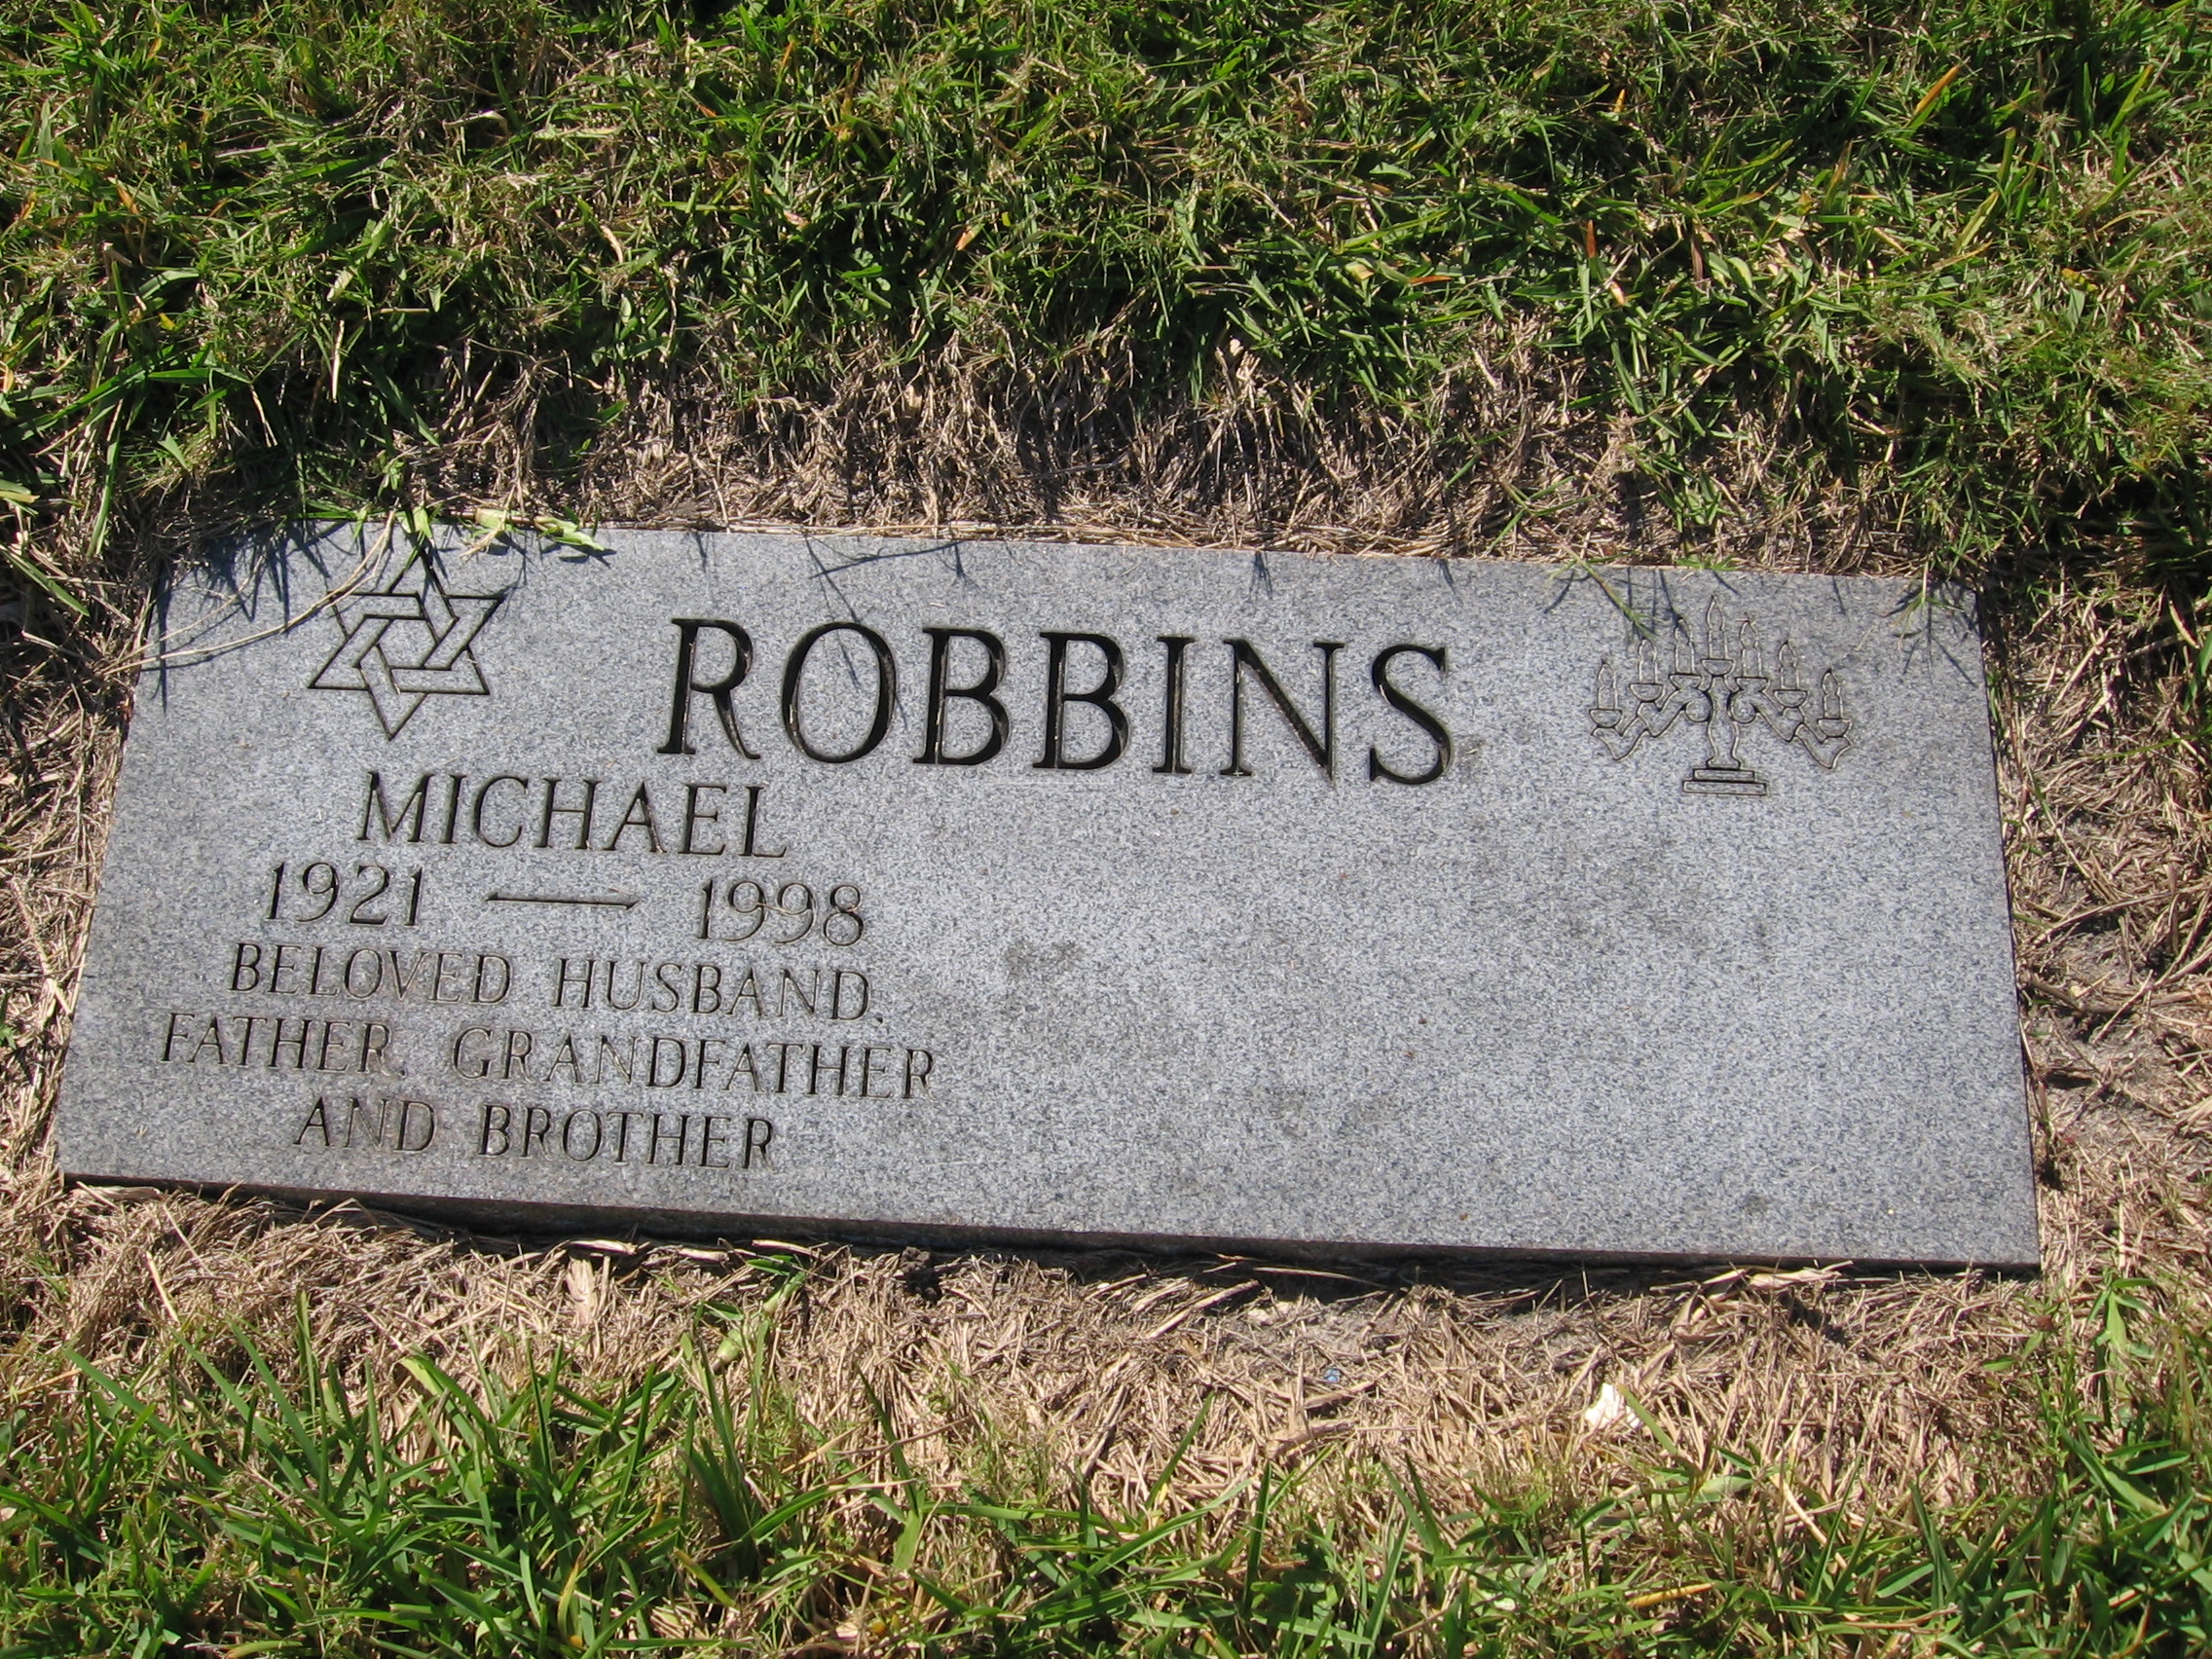 Michael Robbins